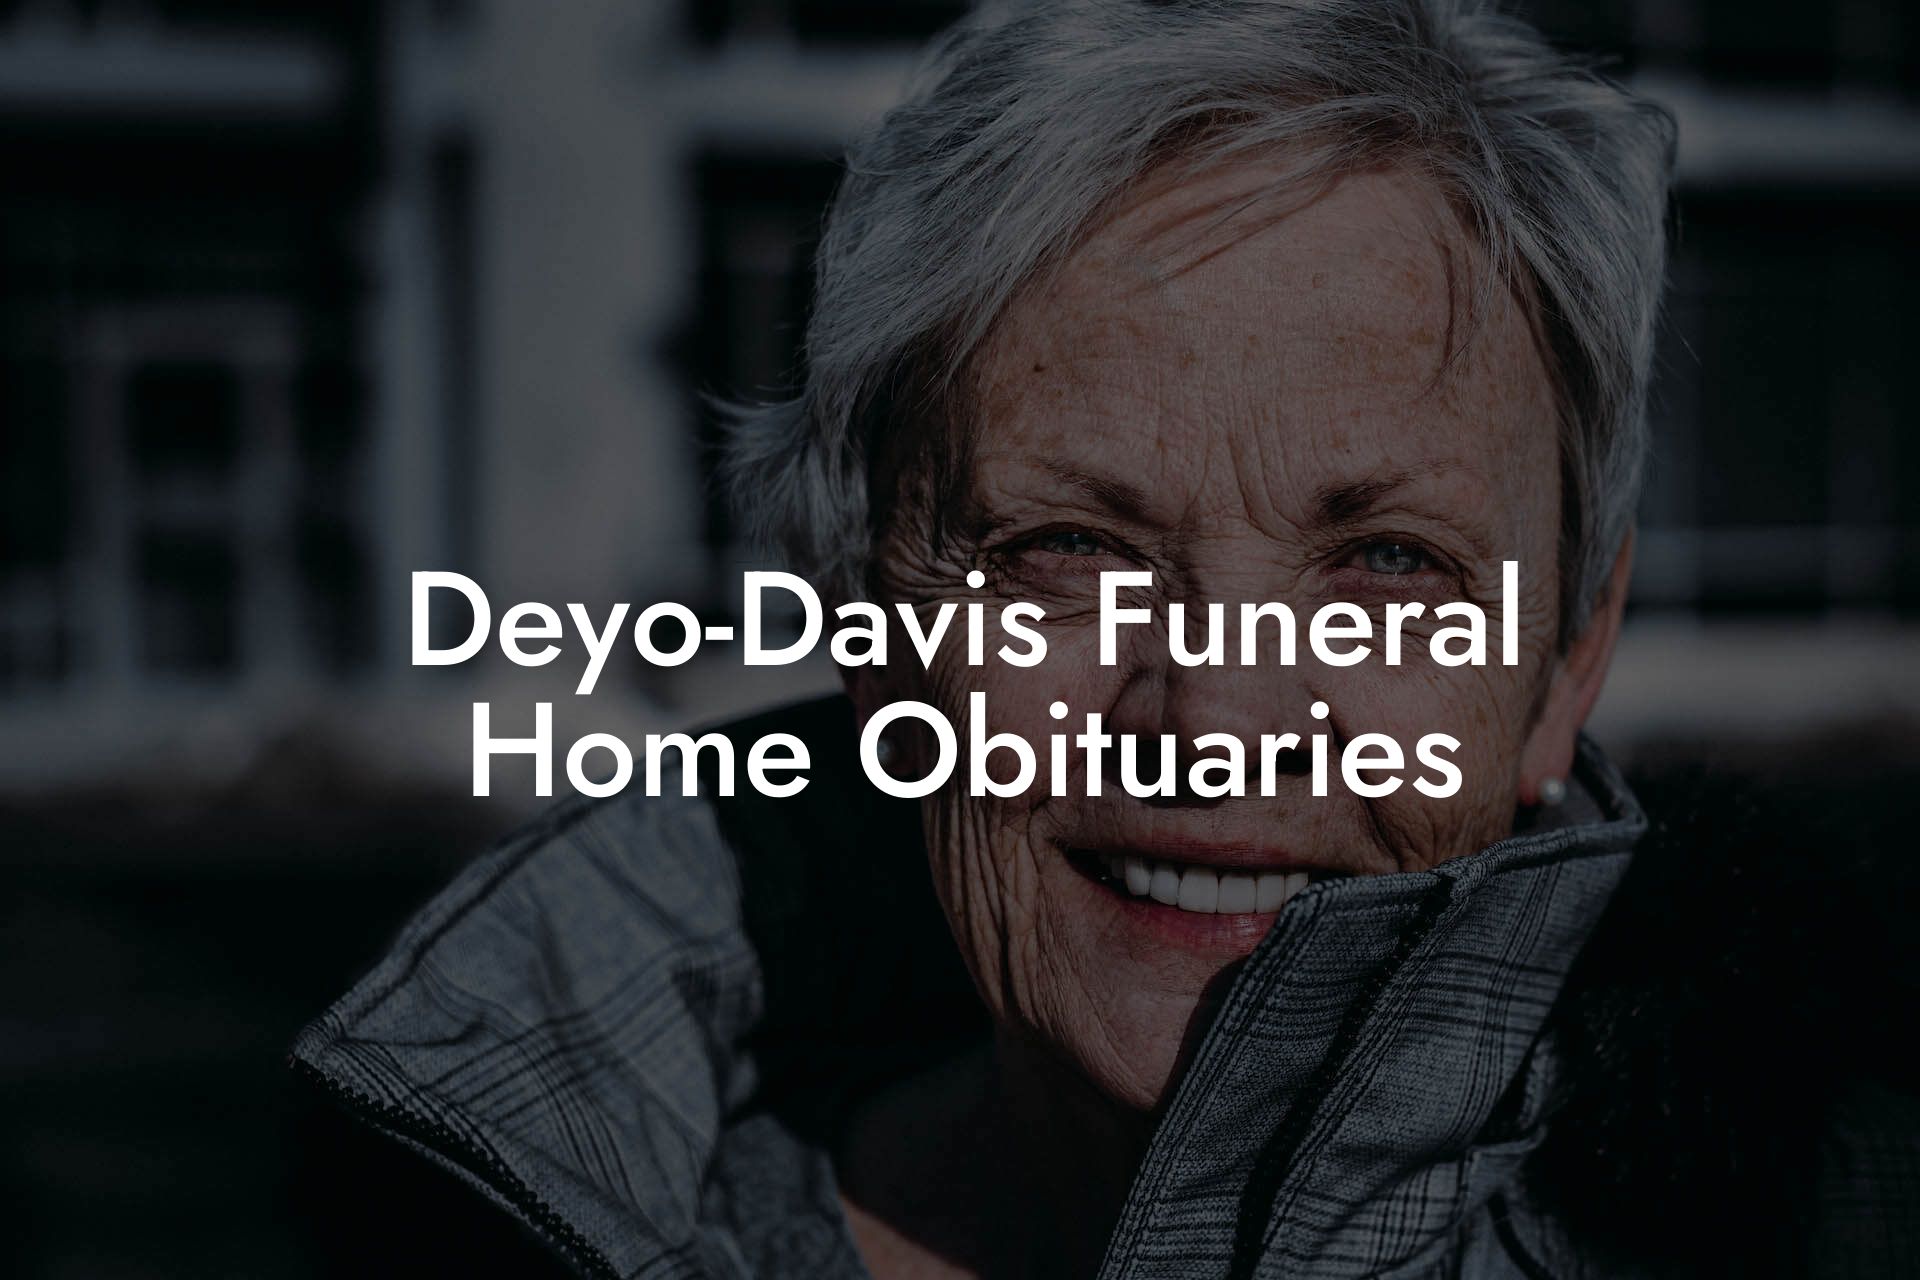 Deyo-Davis Funeral Home Obituaries